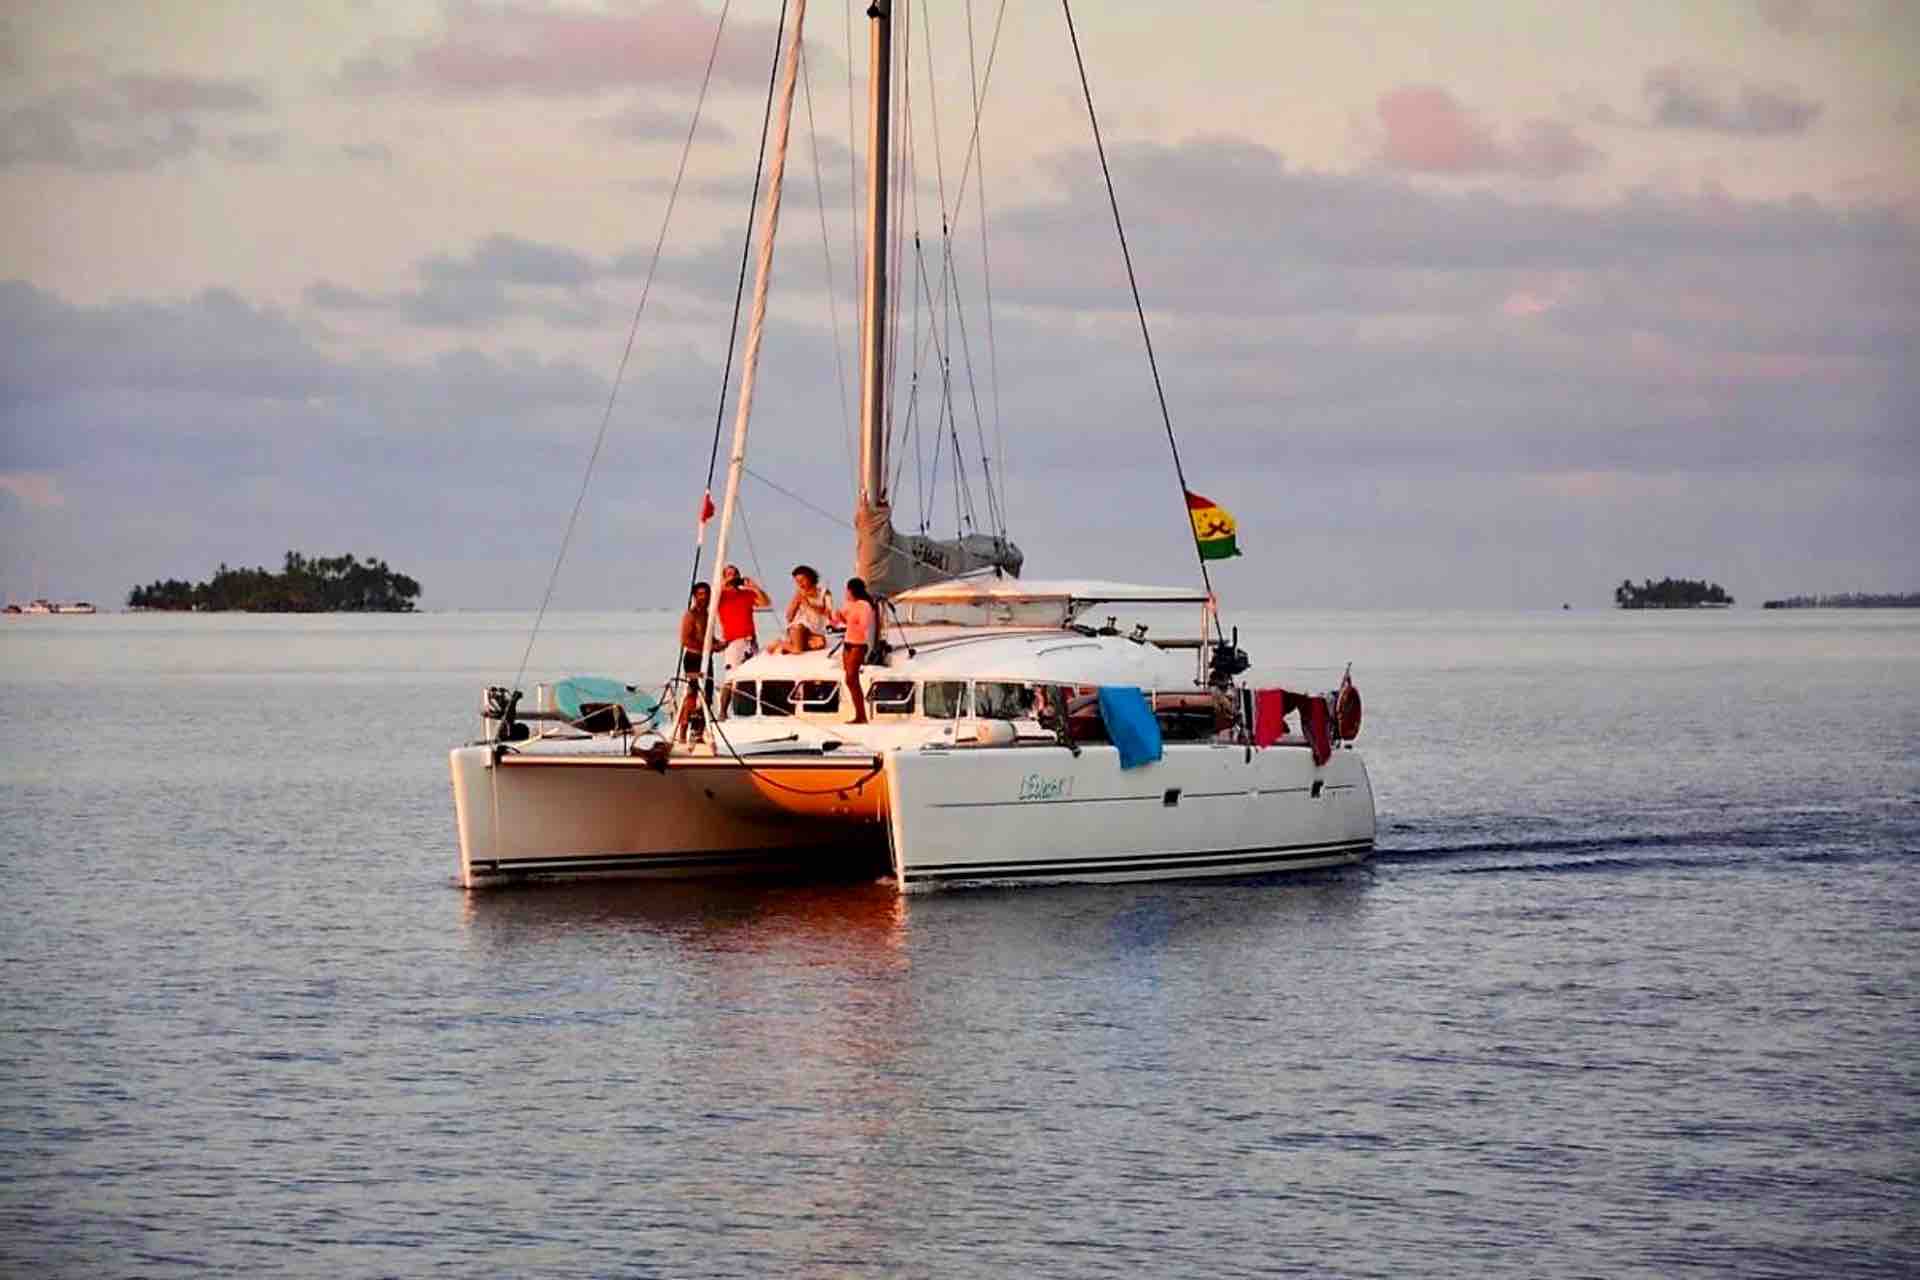 L'Eclectik II catamaran sailing life experience with guests